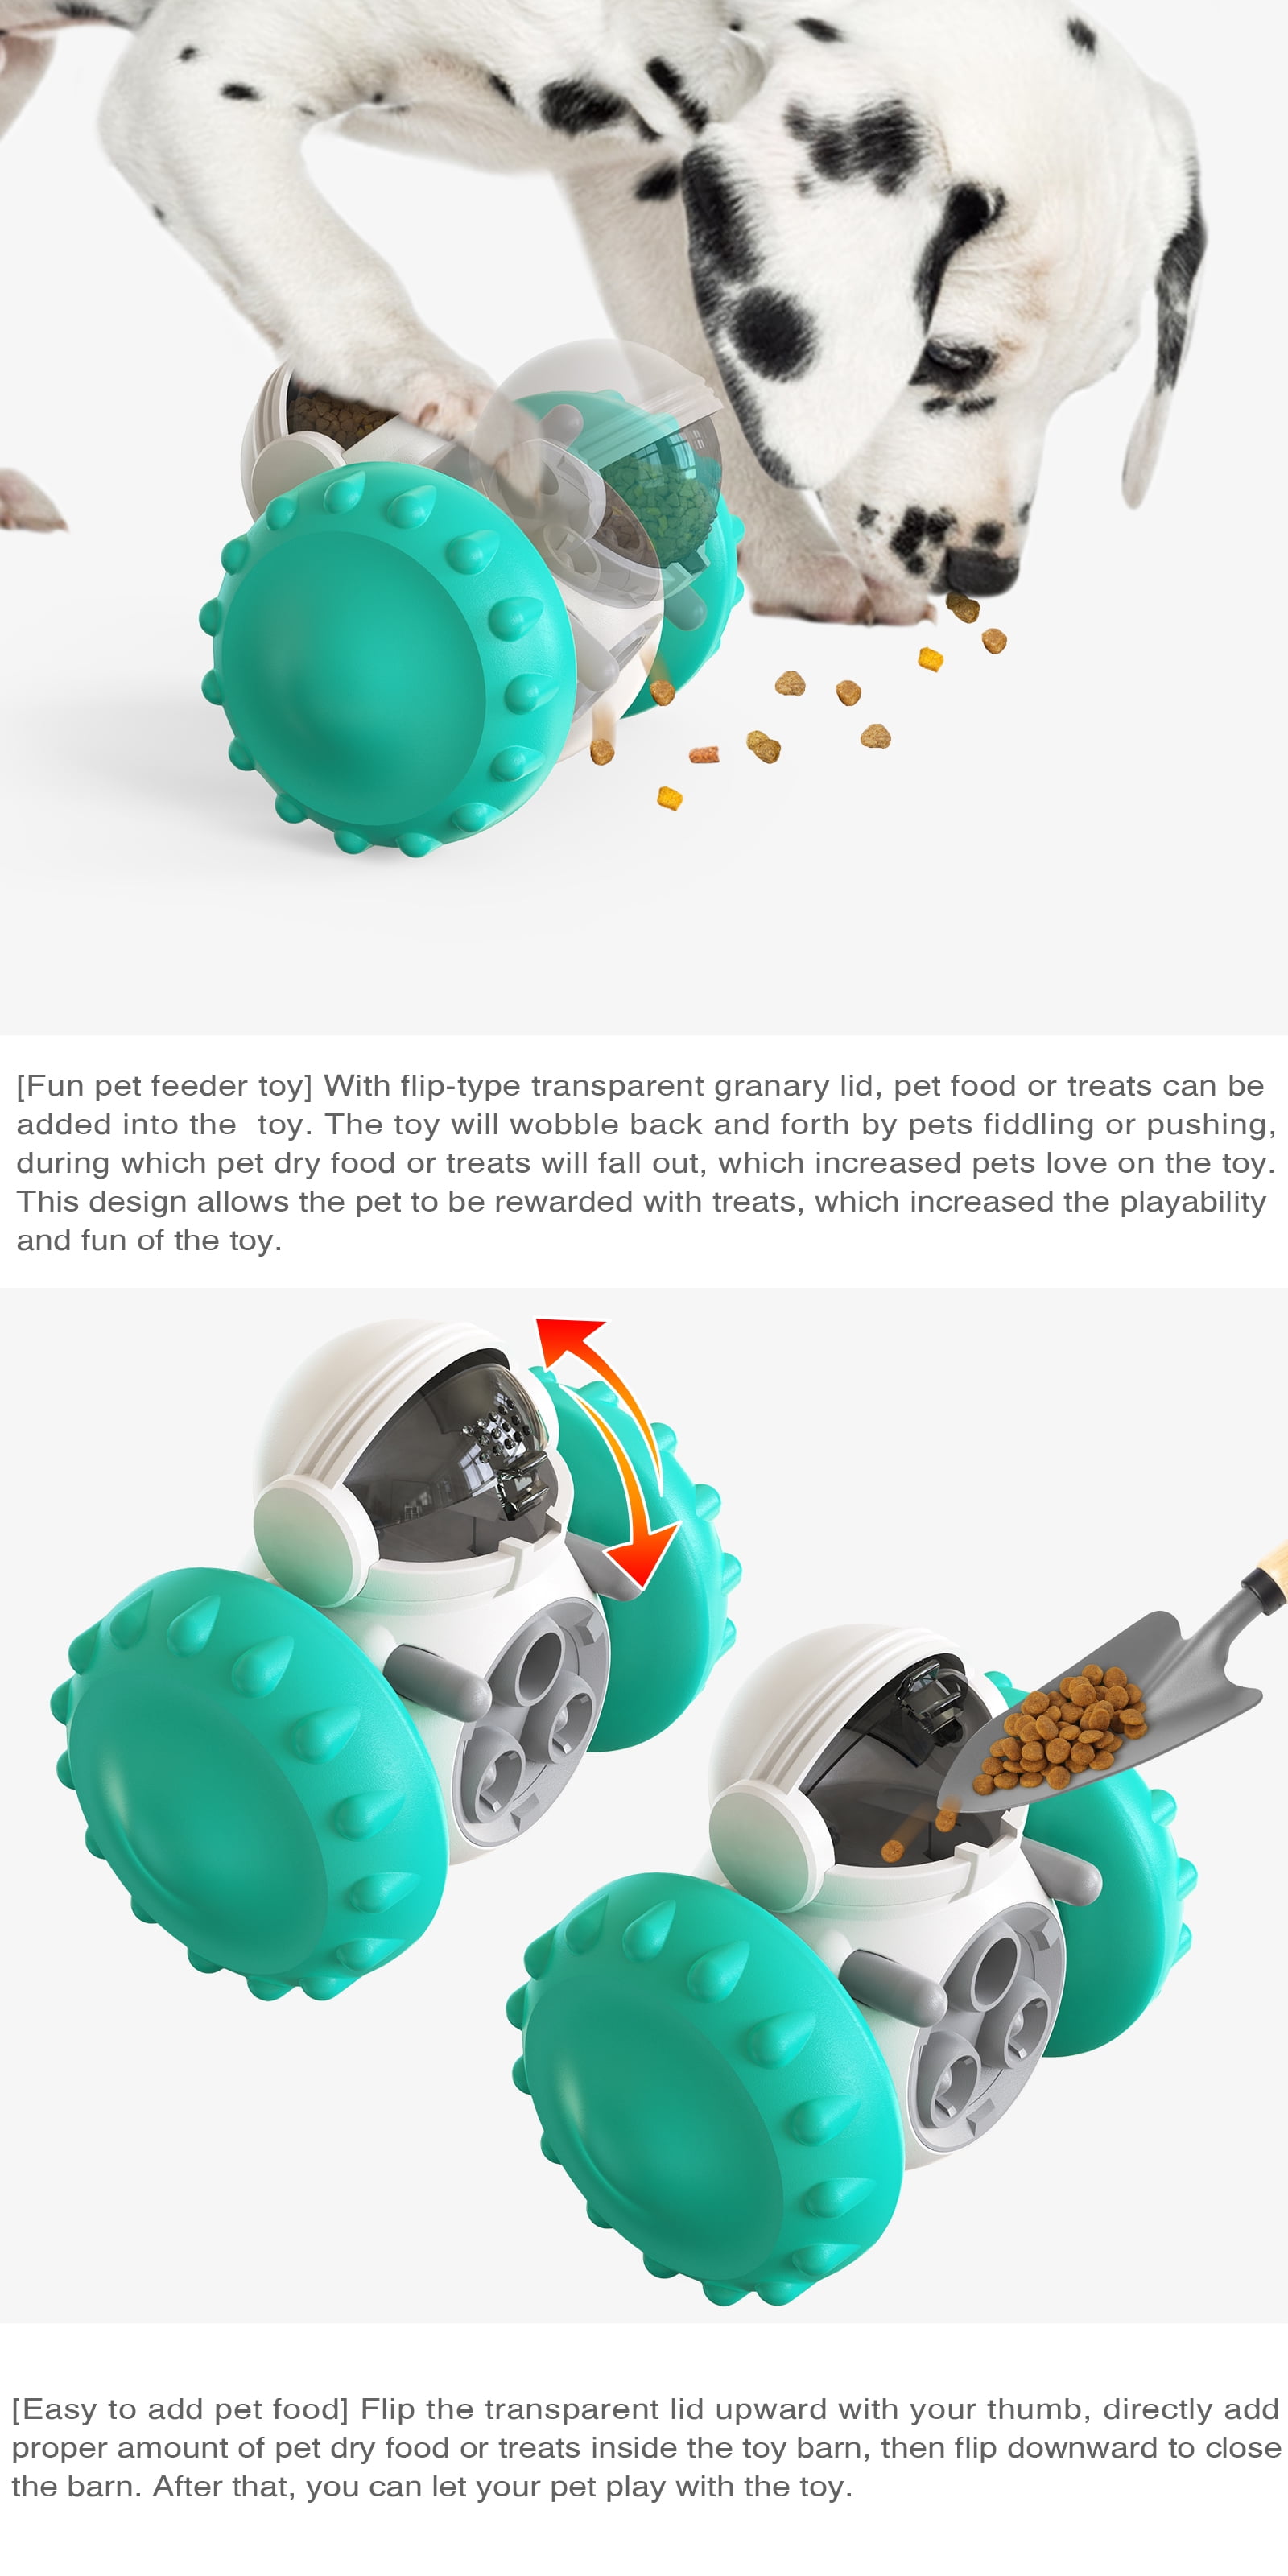 Pet Zone IQ Treat Ball Dog Treat Dispenser Toy Ball Interactive Dog Toy -  3 Dog Food Toy Stimulation, Slow Feeder